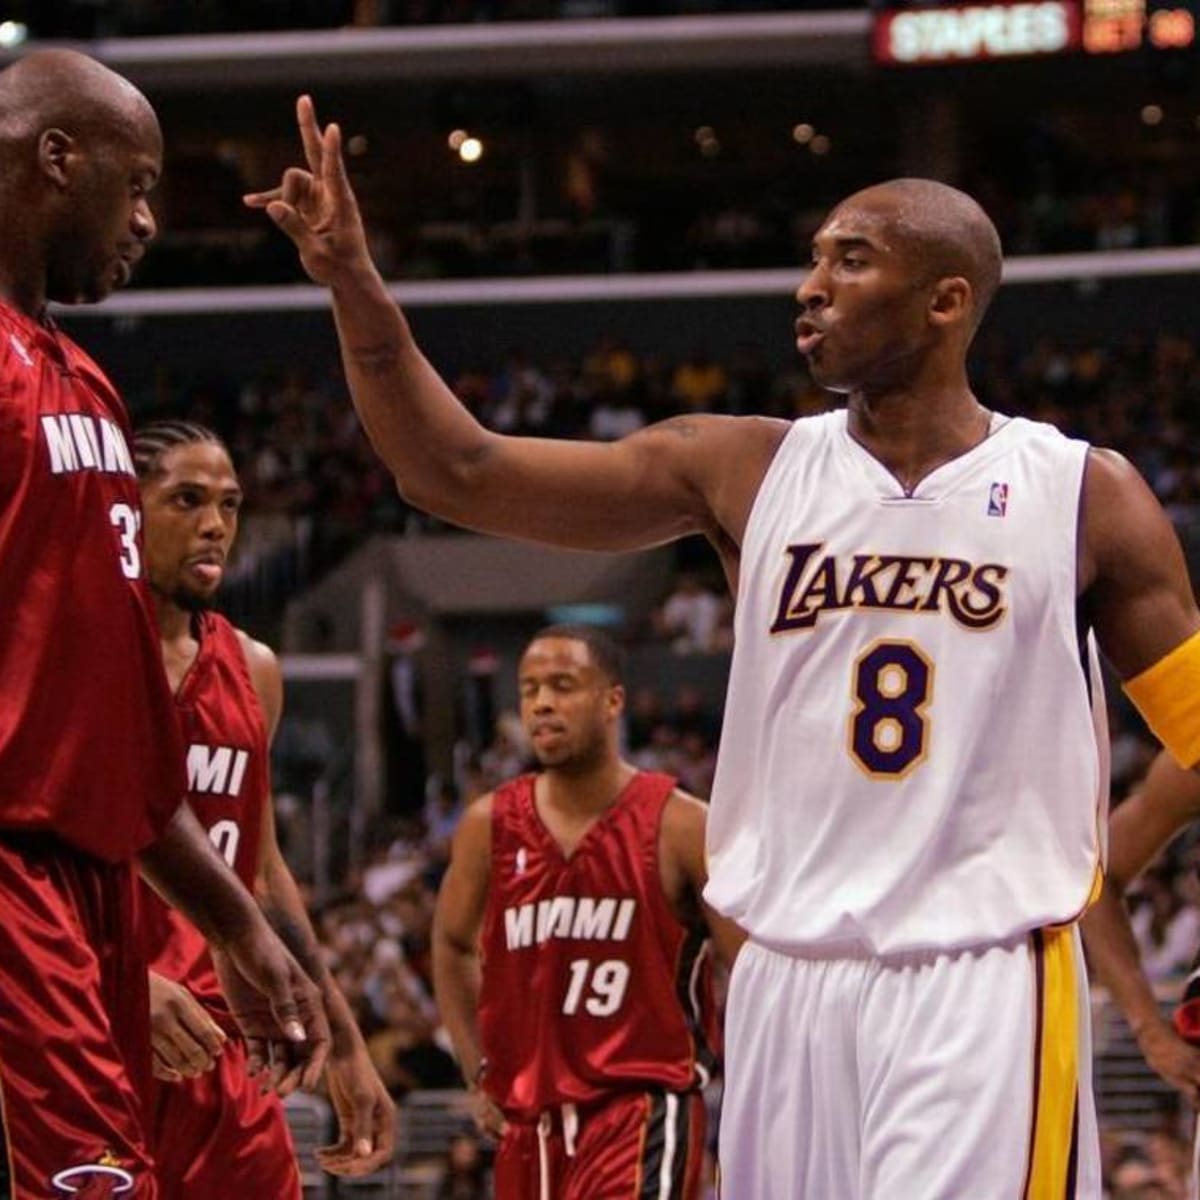 Shaq vs. Kobe. LeBron vs. Cleveland. How “reunion games” became an